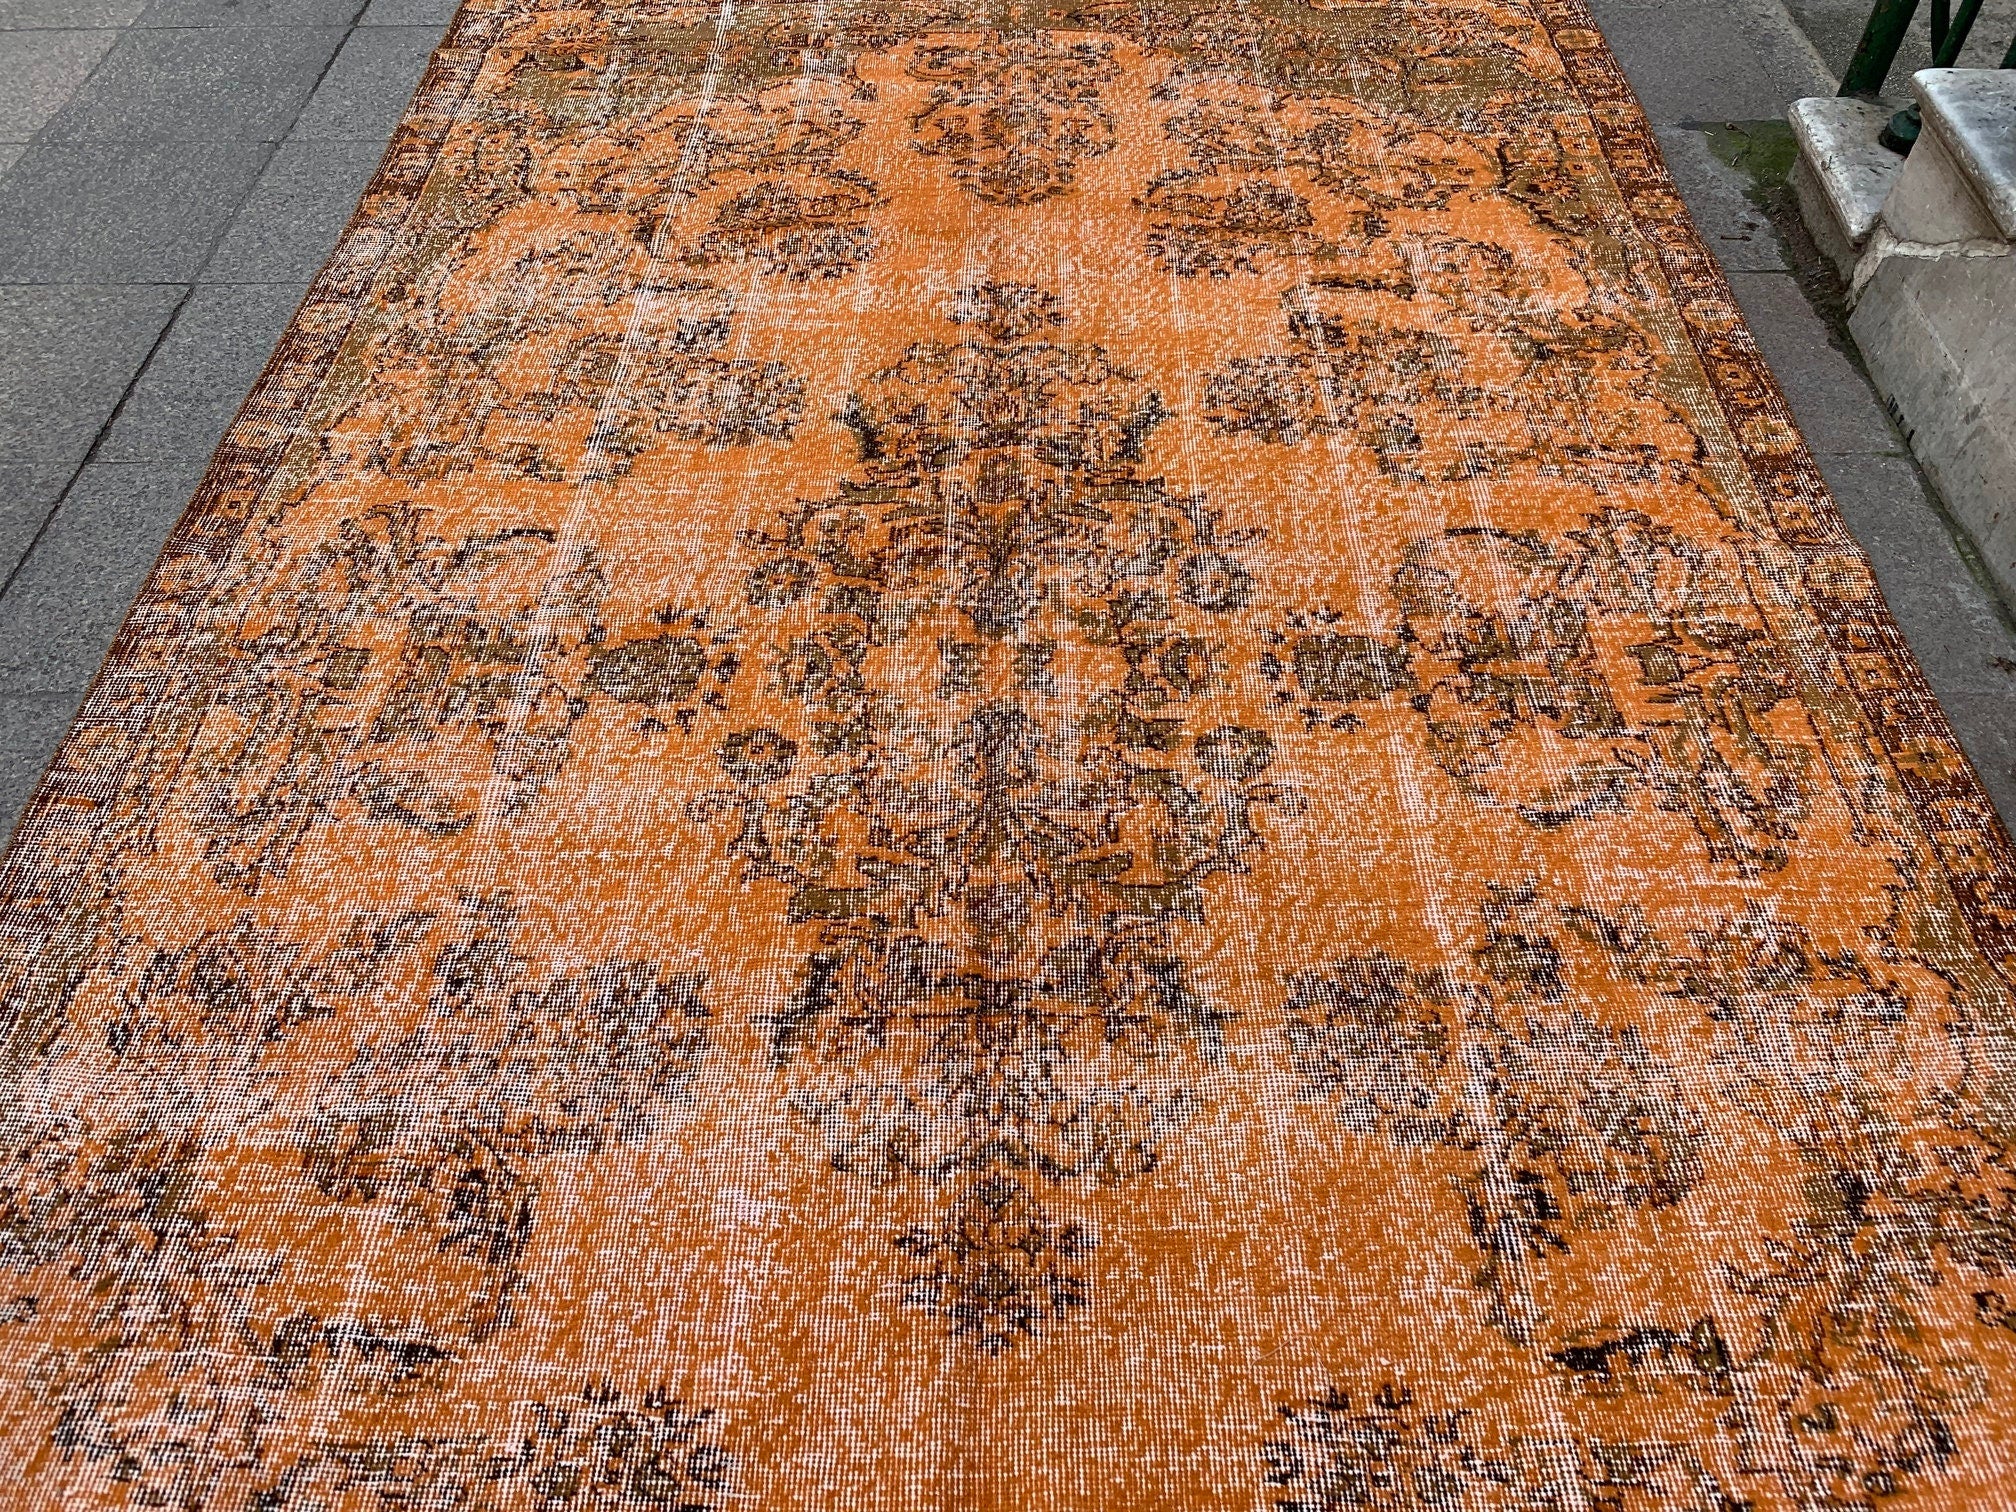 Oriental medallion rug, 6.8x10.5 ft, B875